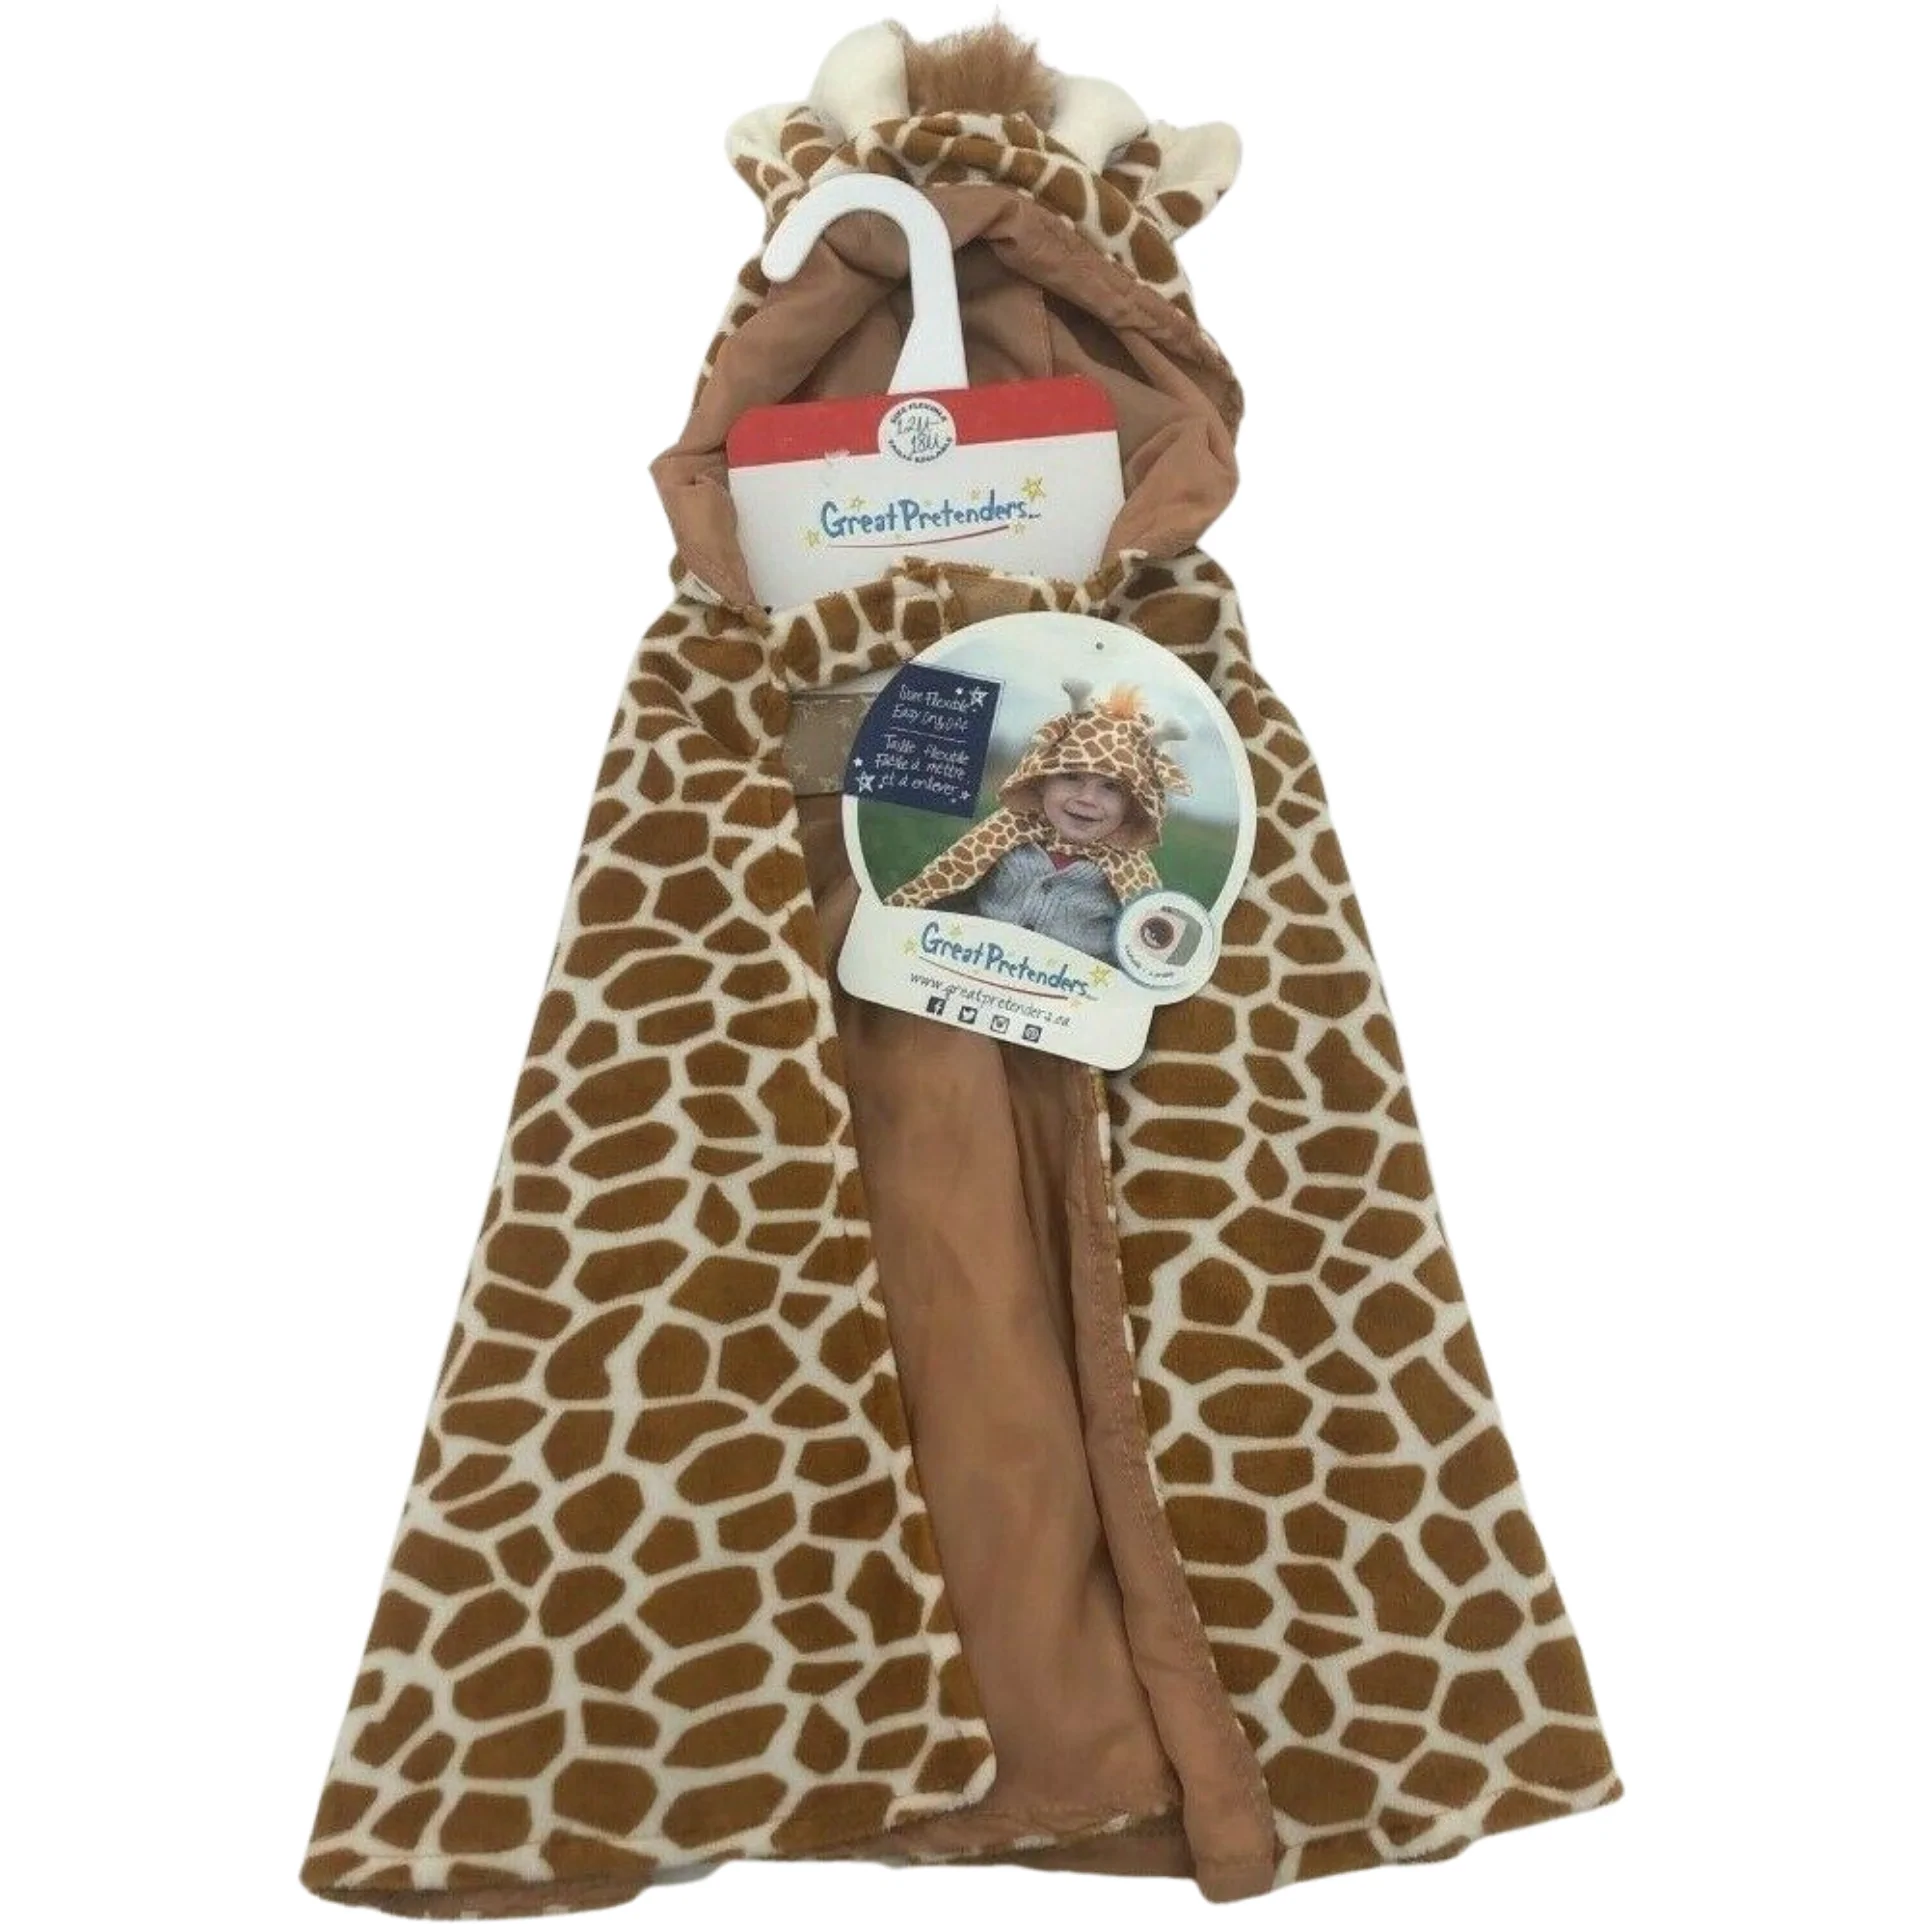 Great Pretenders Infant's Costume / Giraffe Cape / Dress Up / Pretend Play